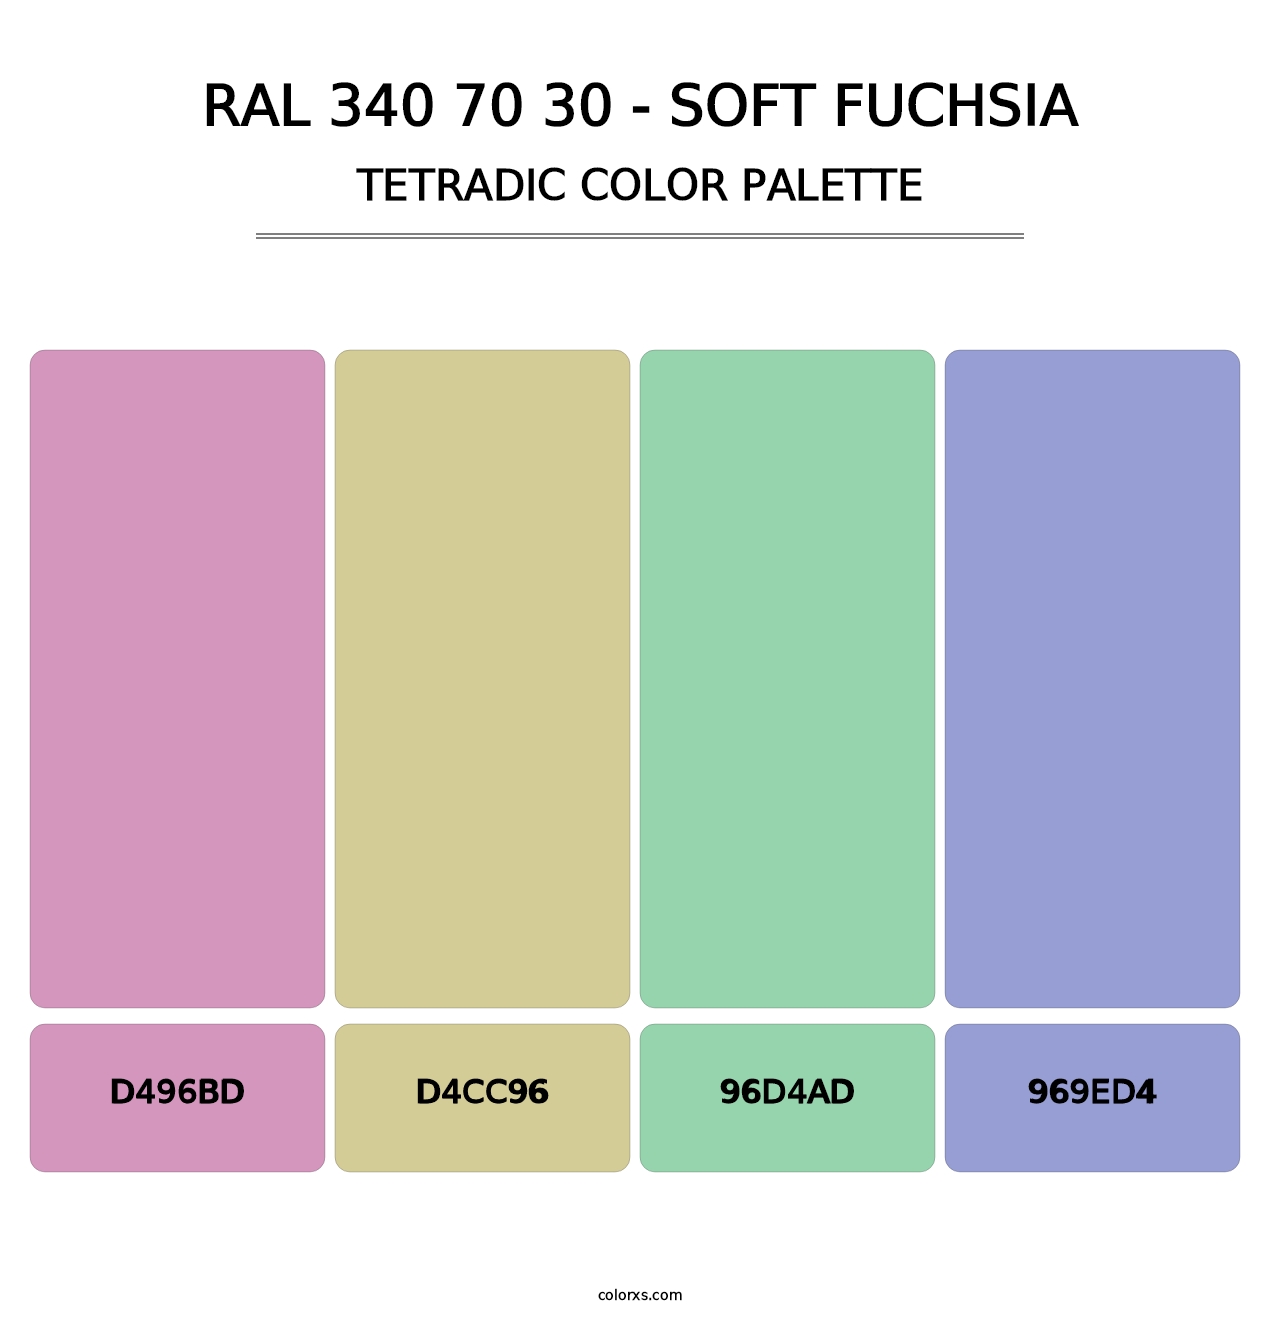 RAL 340 70 30 - Soft Fuchsia - Tetradic Color Palette